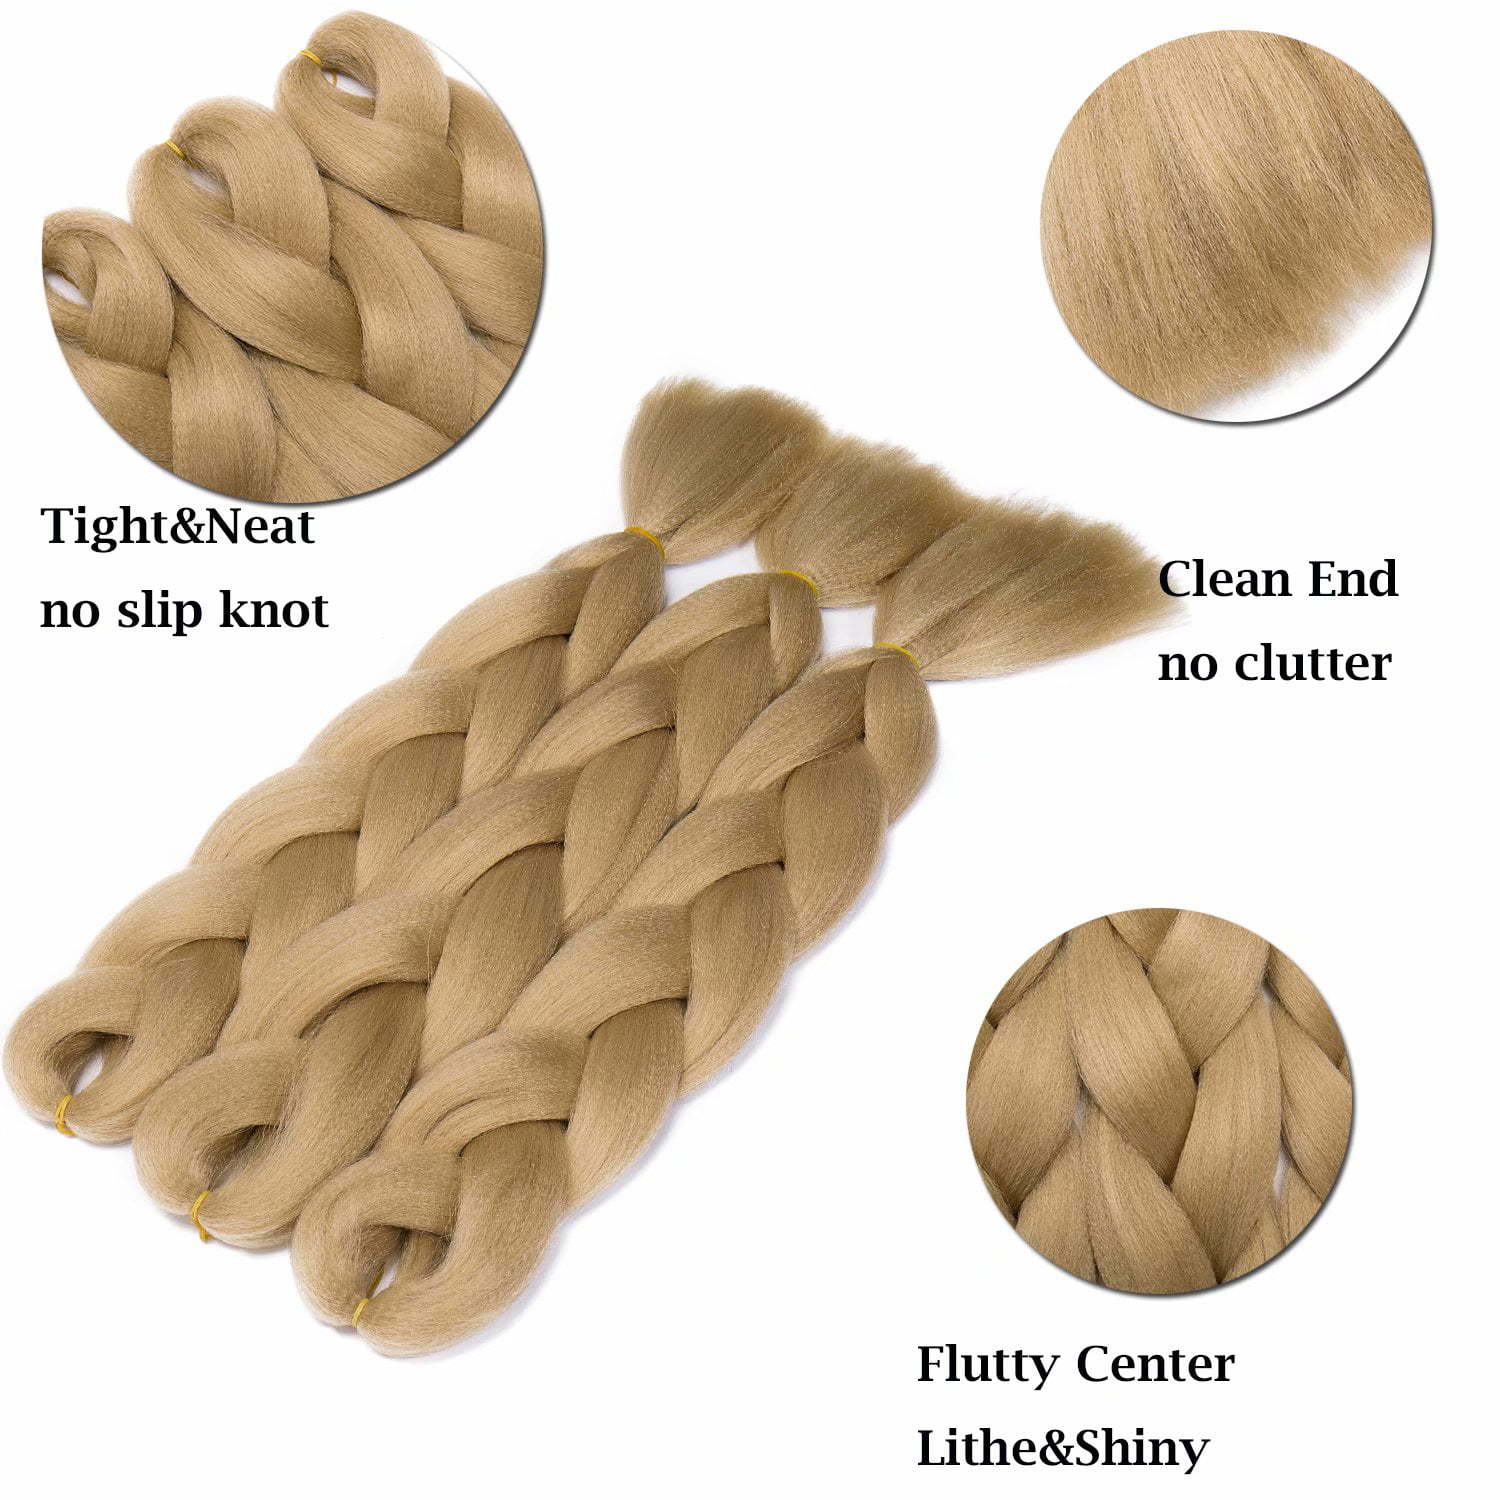 Benehair Jumbo Braiding Hair Extensions 24 Afro Box Braids Crochet Twist  Braid Ponytail 24 Light Auburn